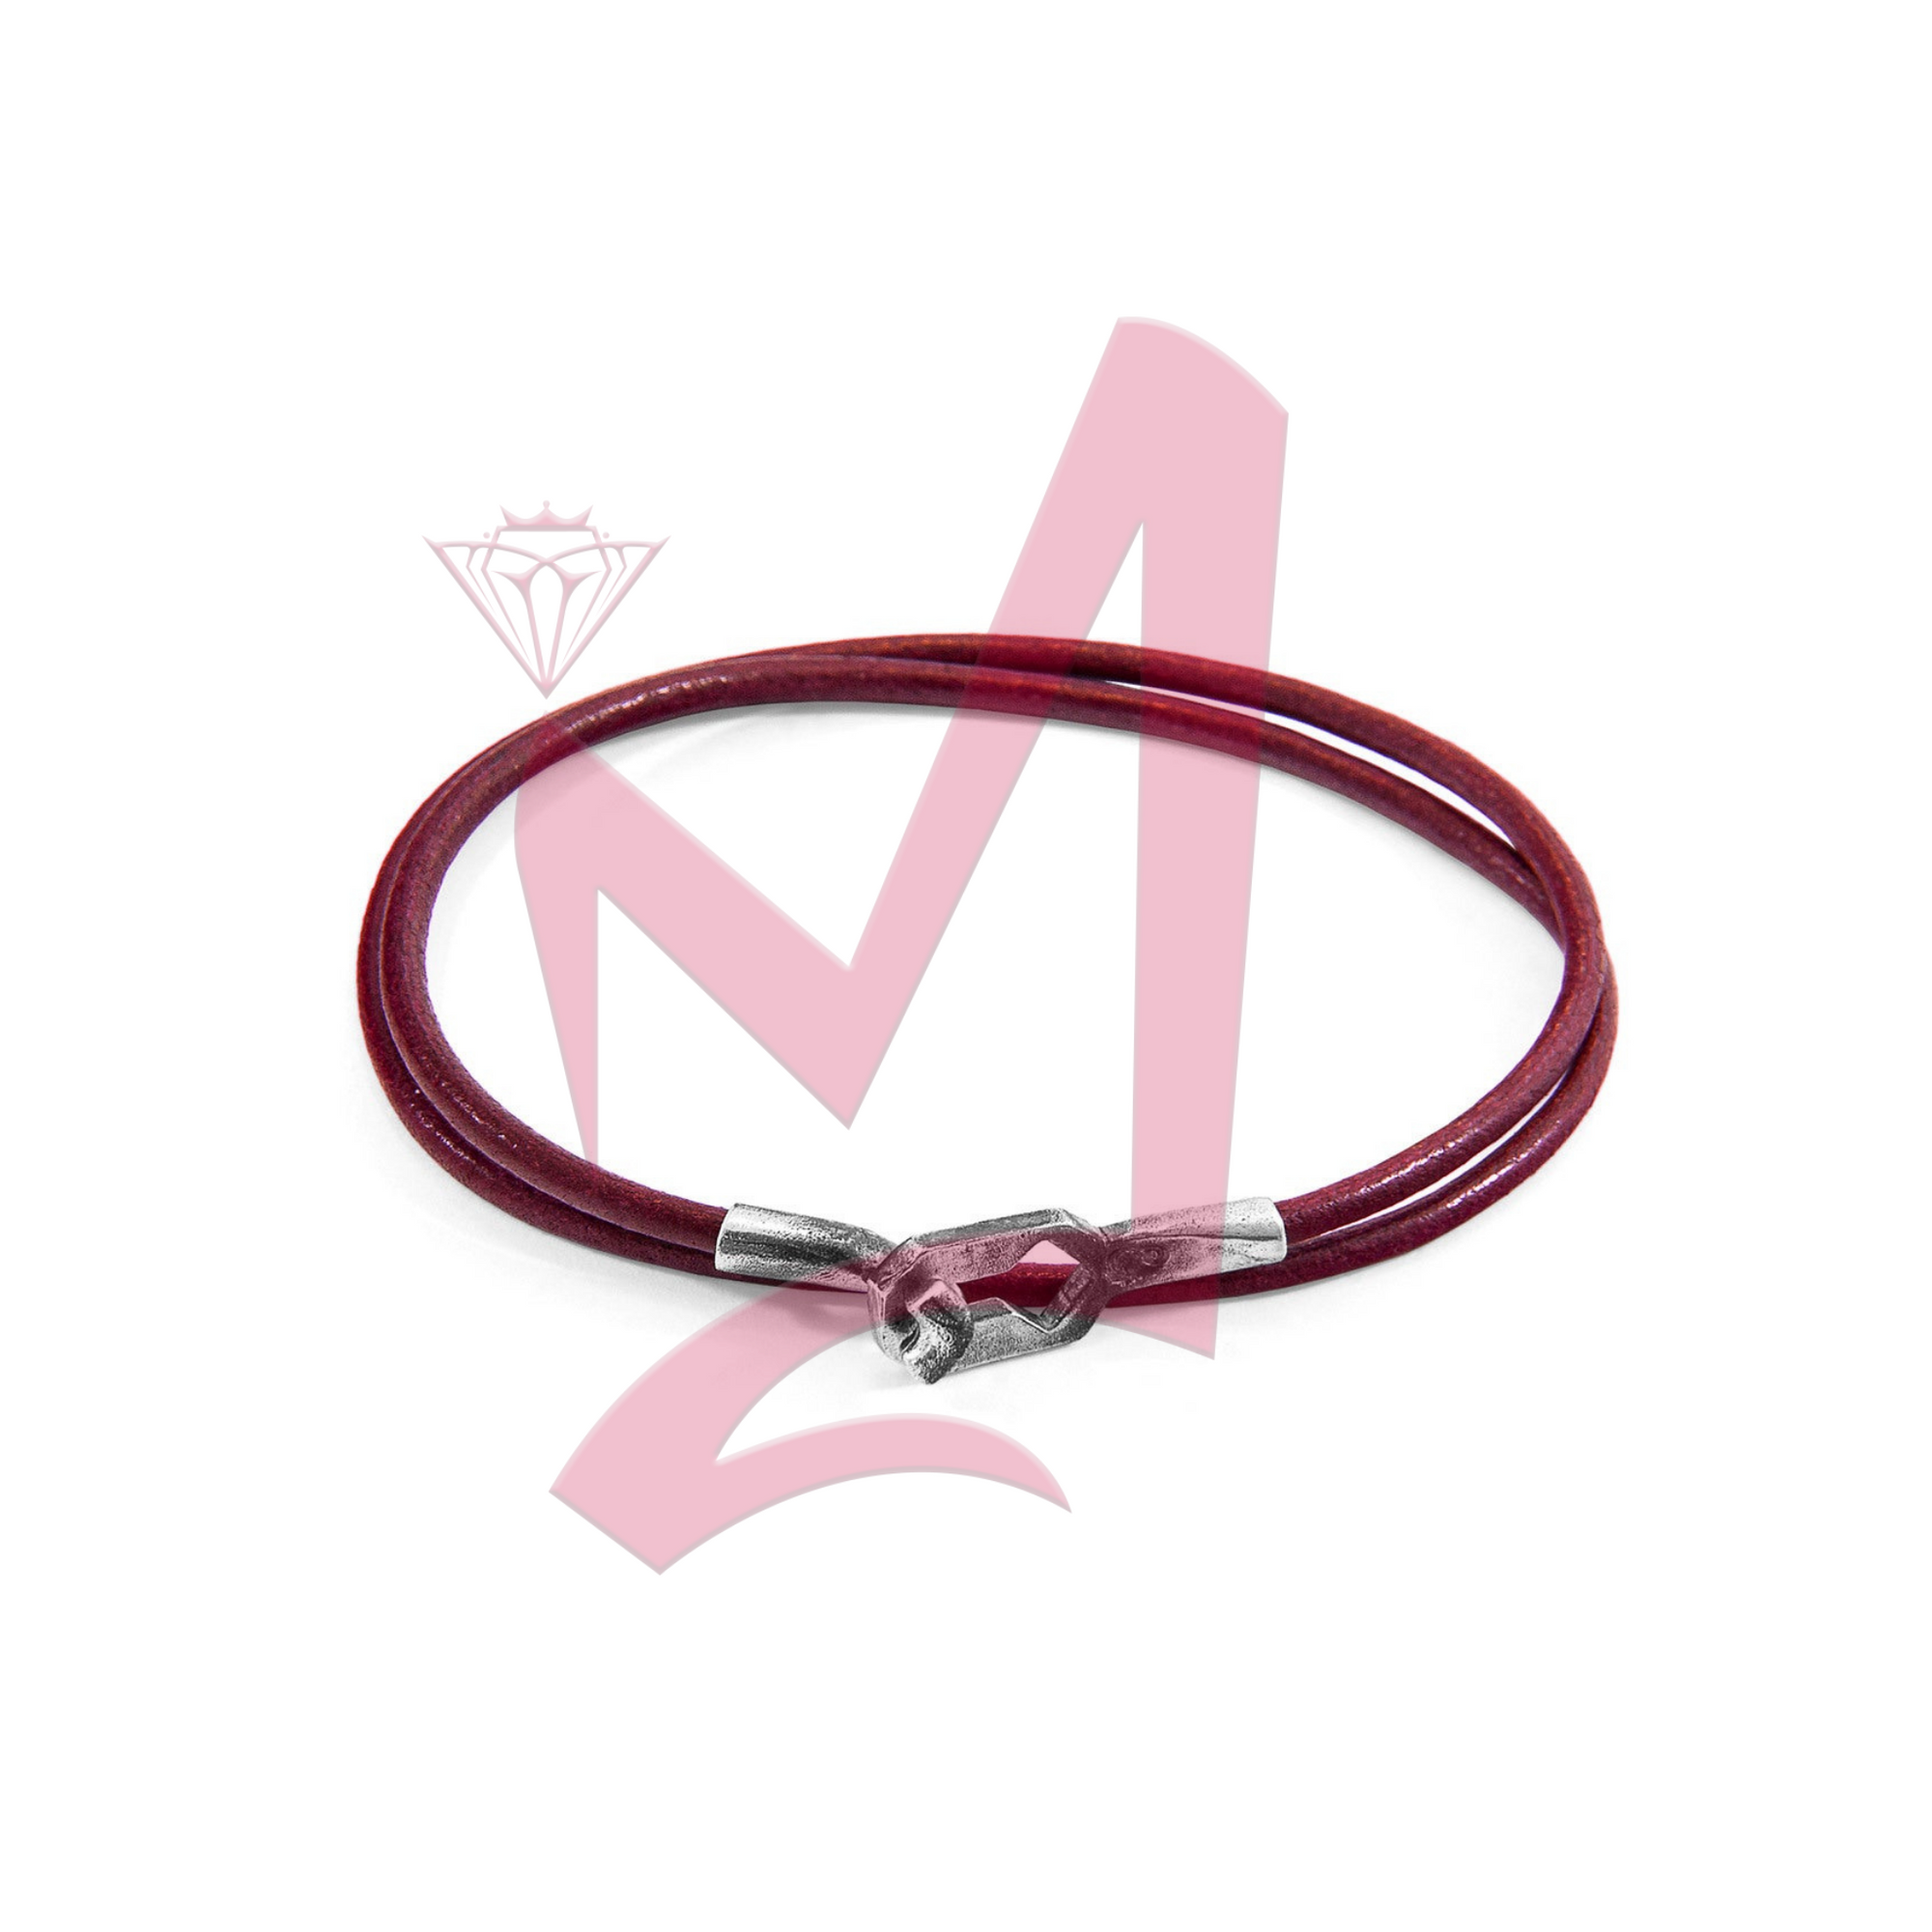 Bordeaux Red Tenby Silver & Leather Bracelet